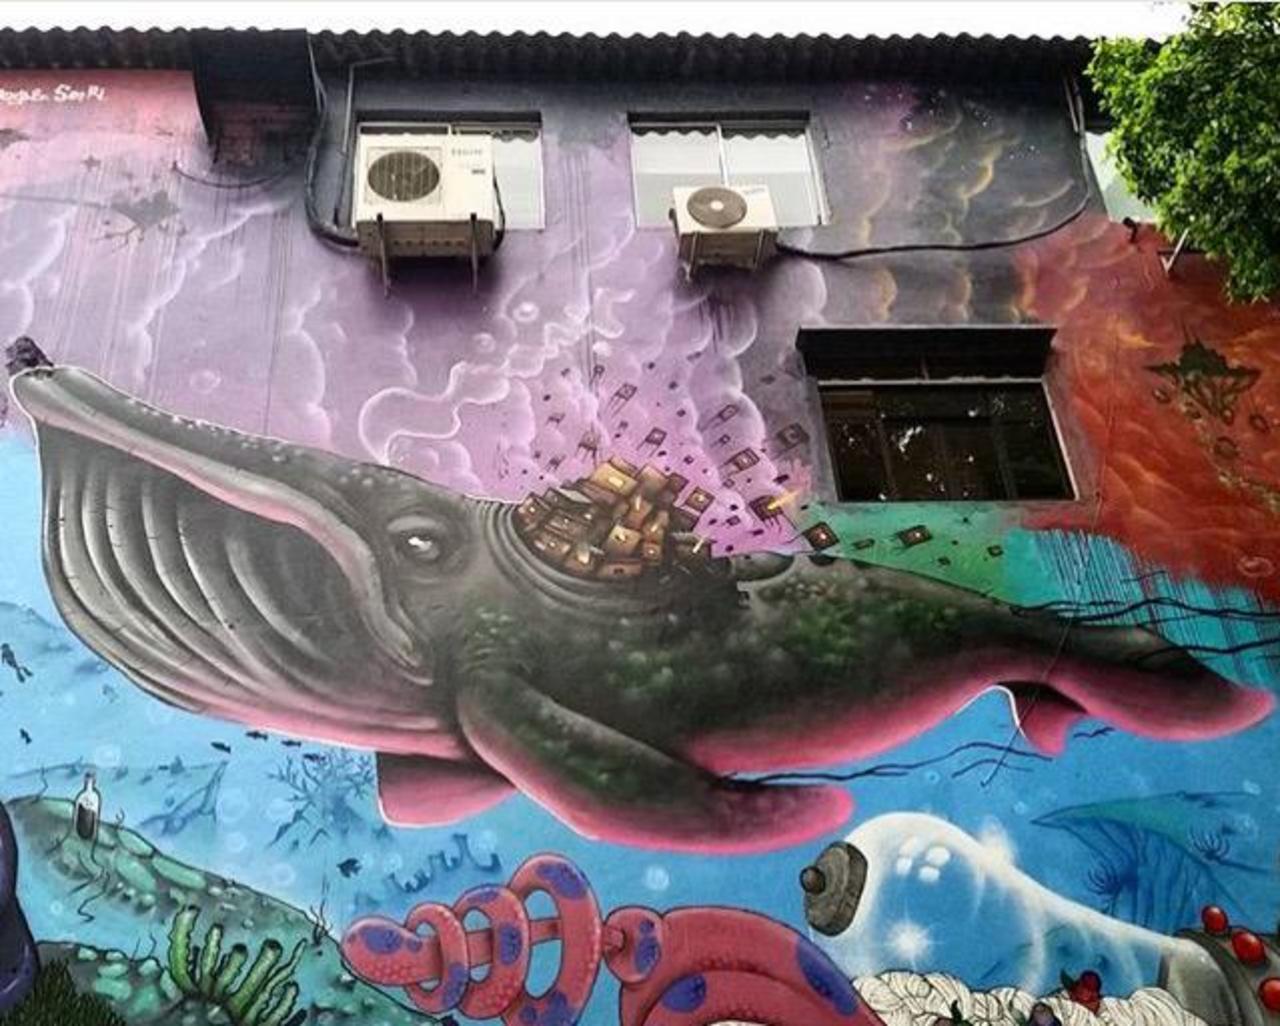 Street Art by joks_johnes Pinheiros, São Paulo 

#art #mural #graffiti #streetart http://t.co/atiiFMkTO5